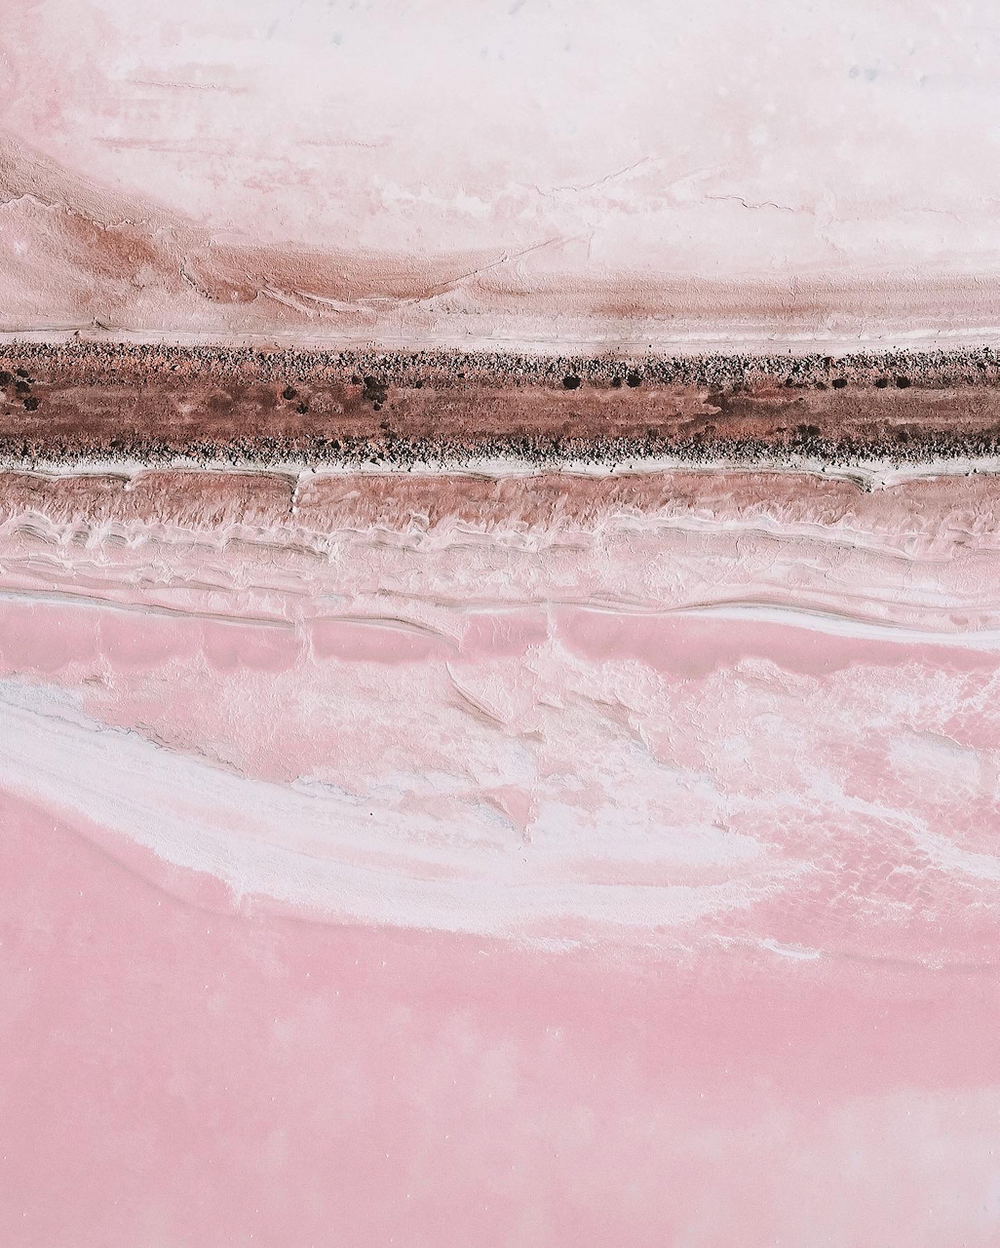 Drone View of Pink Lake - Bumbunga - South Australia (SA) - Australia